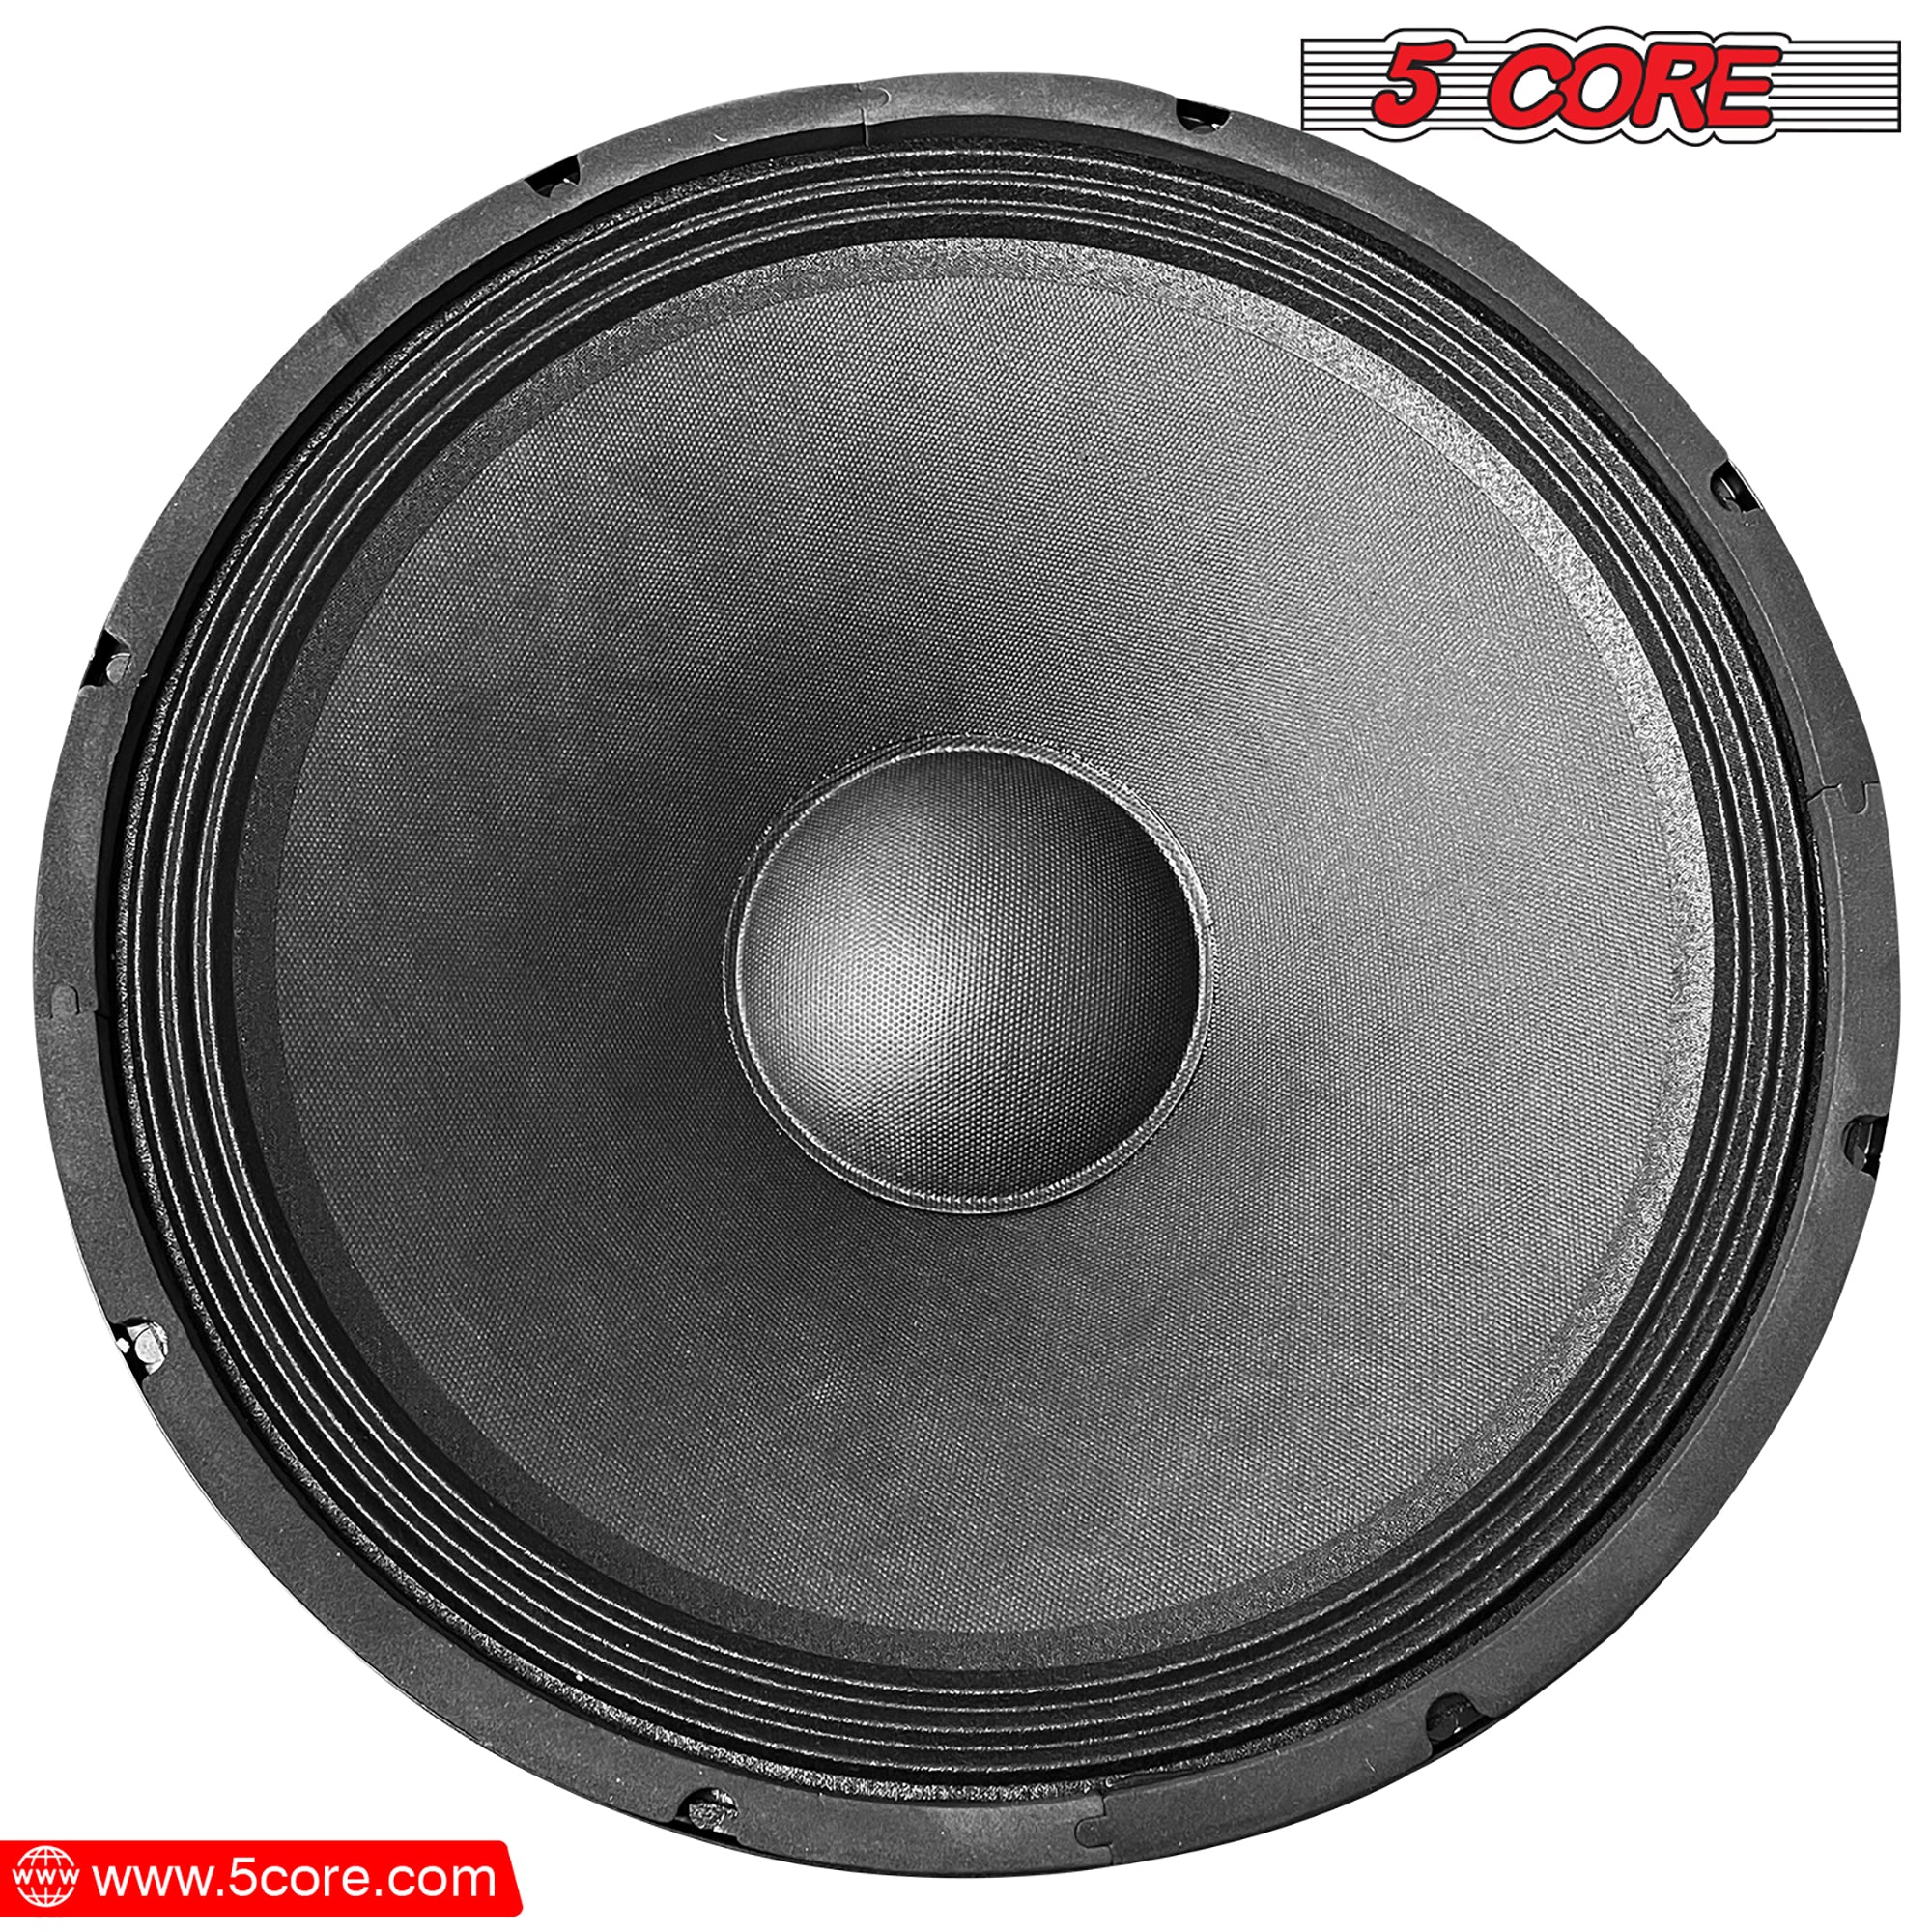 5 Core 15 Inch Subwoofer Speaker: Powerful Sound Reinforcement